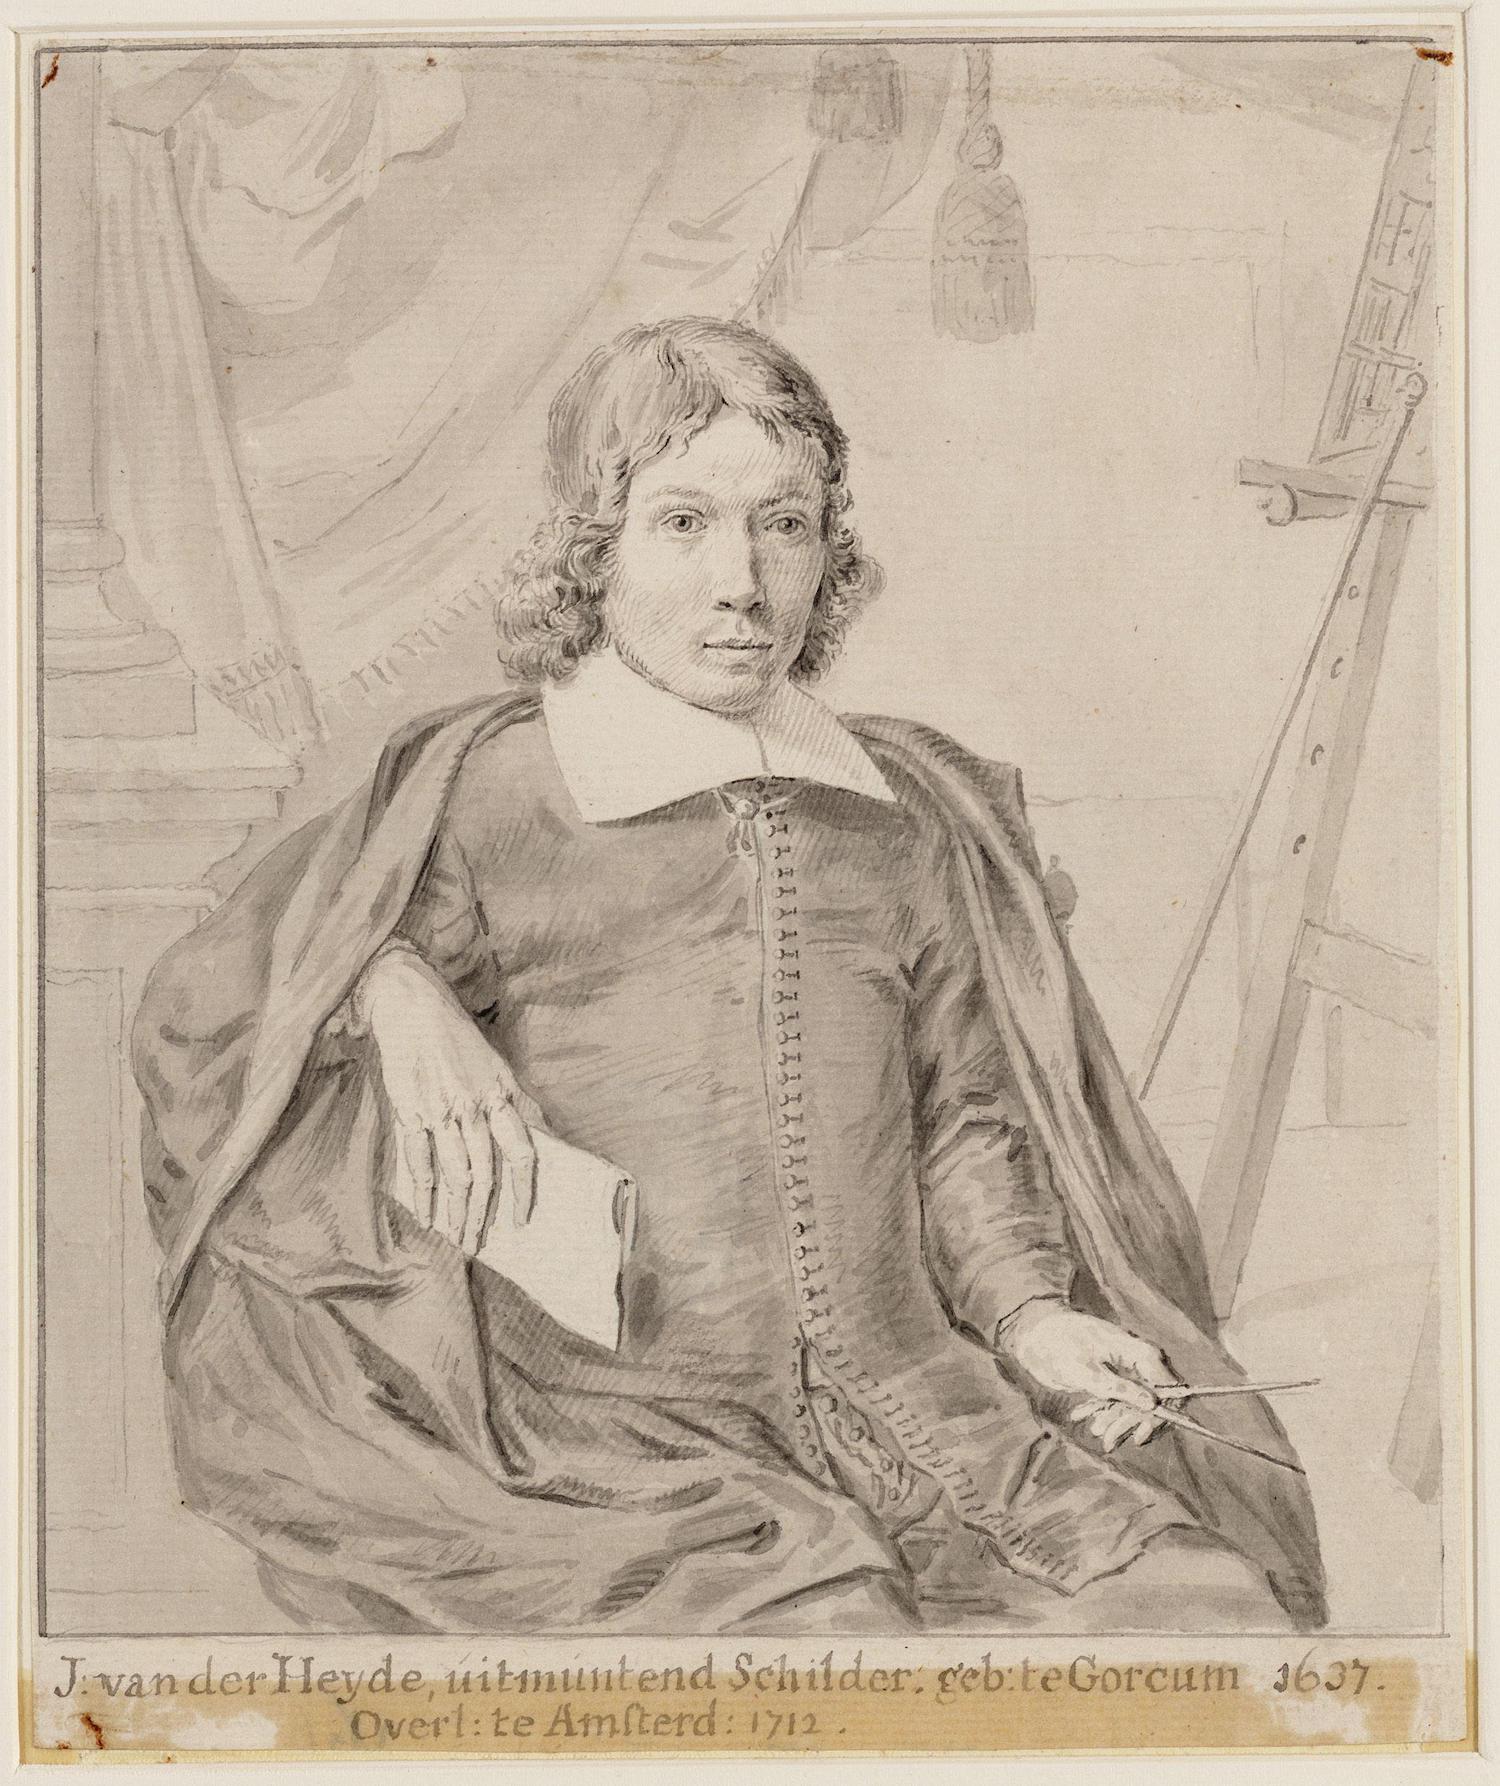 Jan van der Heyden - 5 marzo 1637 - 28 marzo 1712